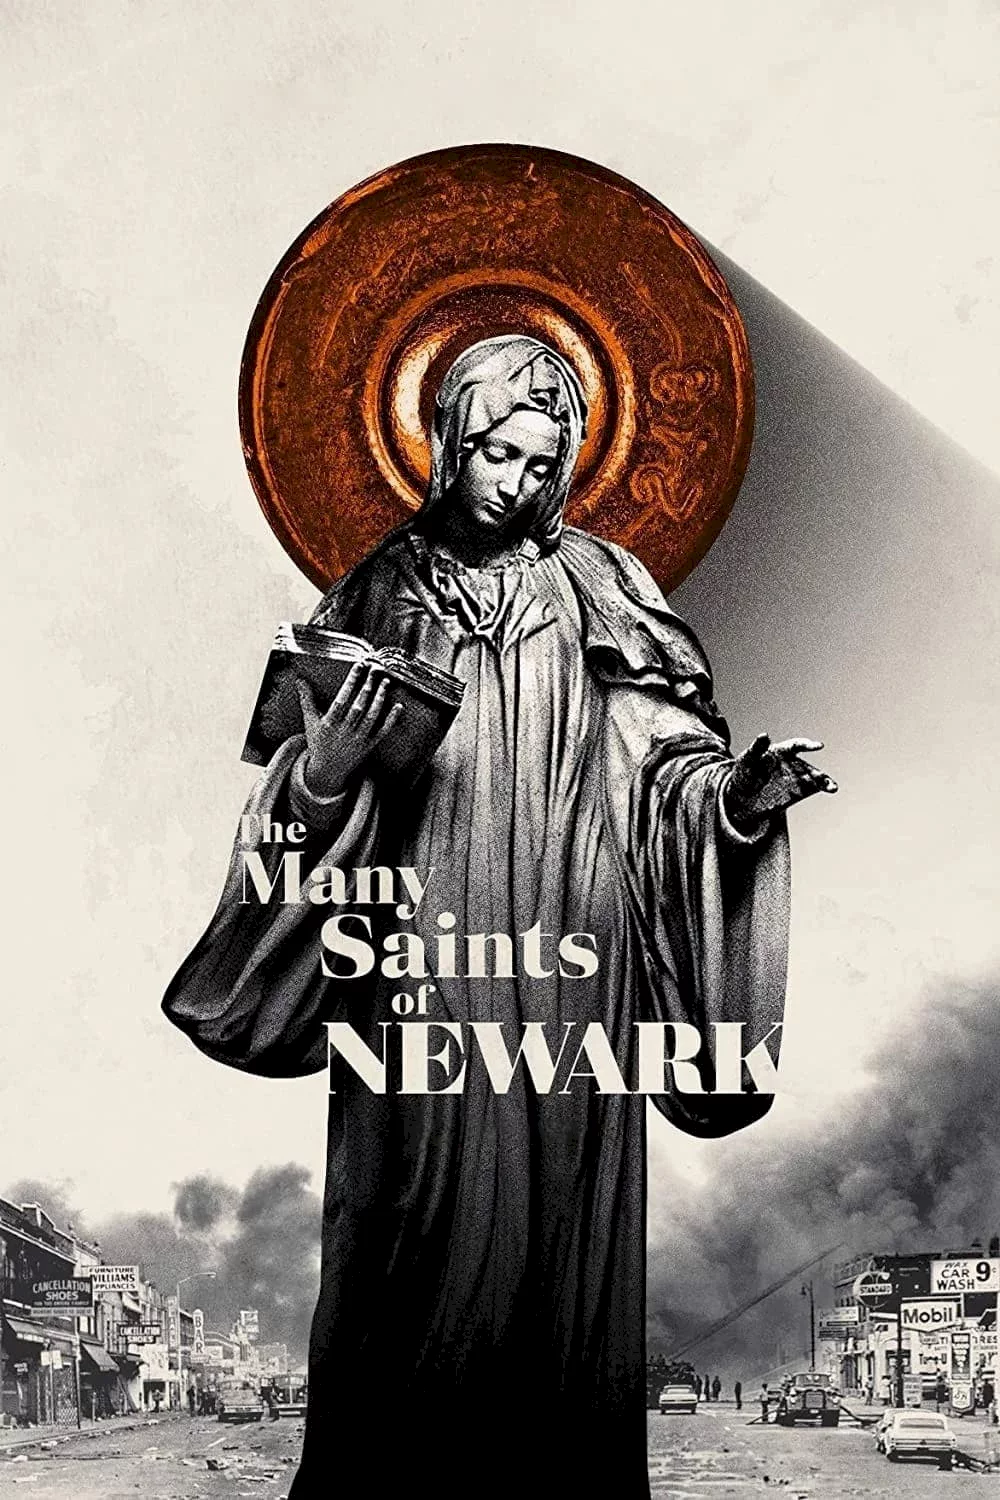 Photo du film : Many Saints Of Newark - Une histoire des Soprano